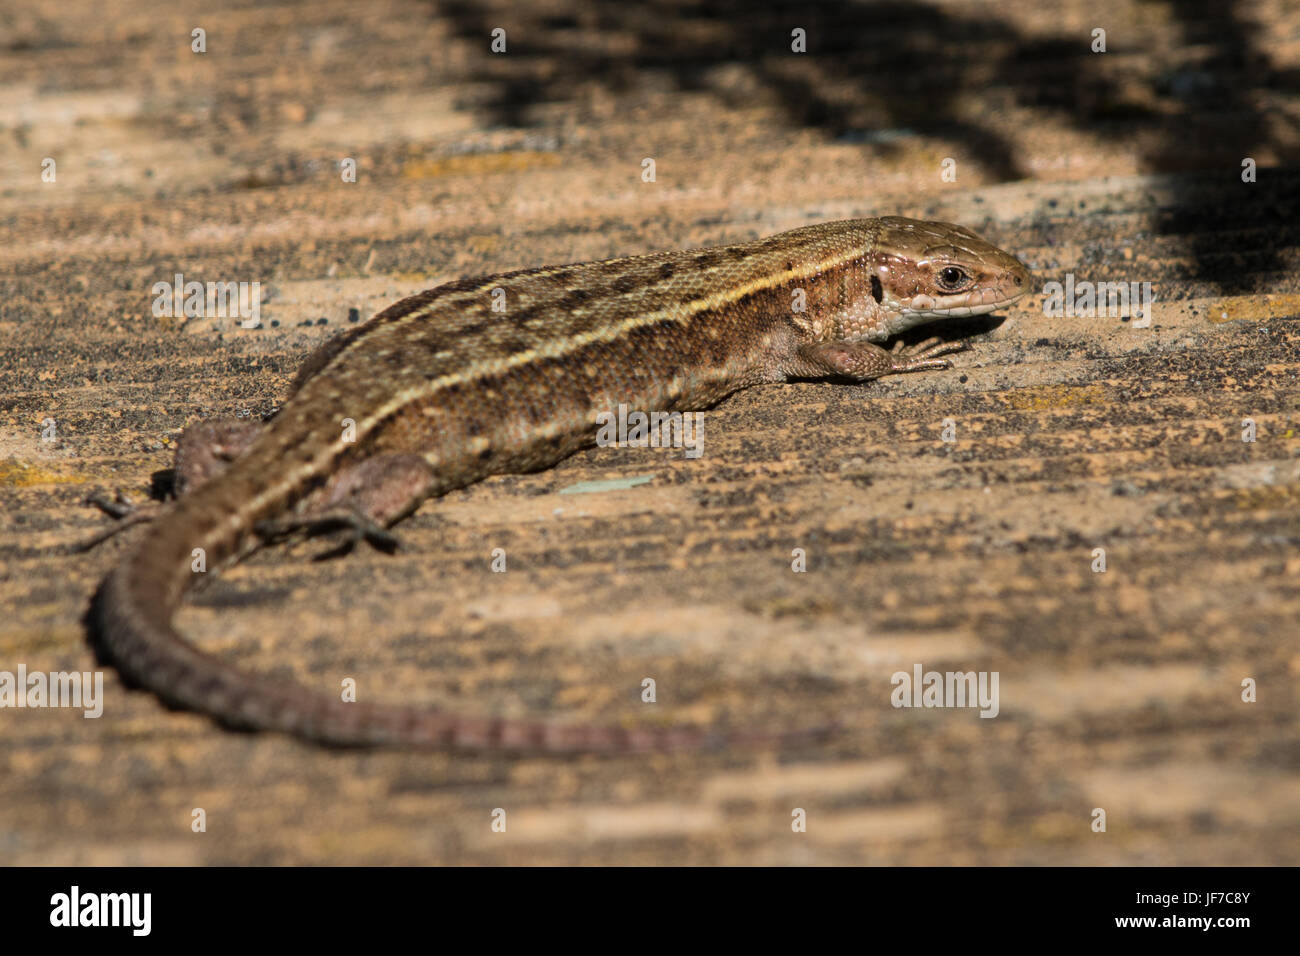 pregnant female Viviparous Lizard (Zootoca vivipara (formerly Lacerta vivipara)) on a wooden boardwalk Stock Photo